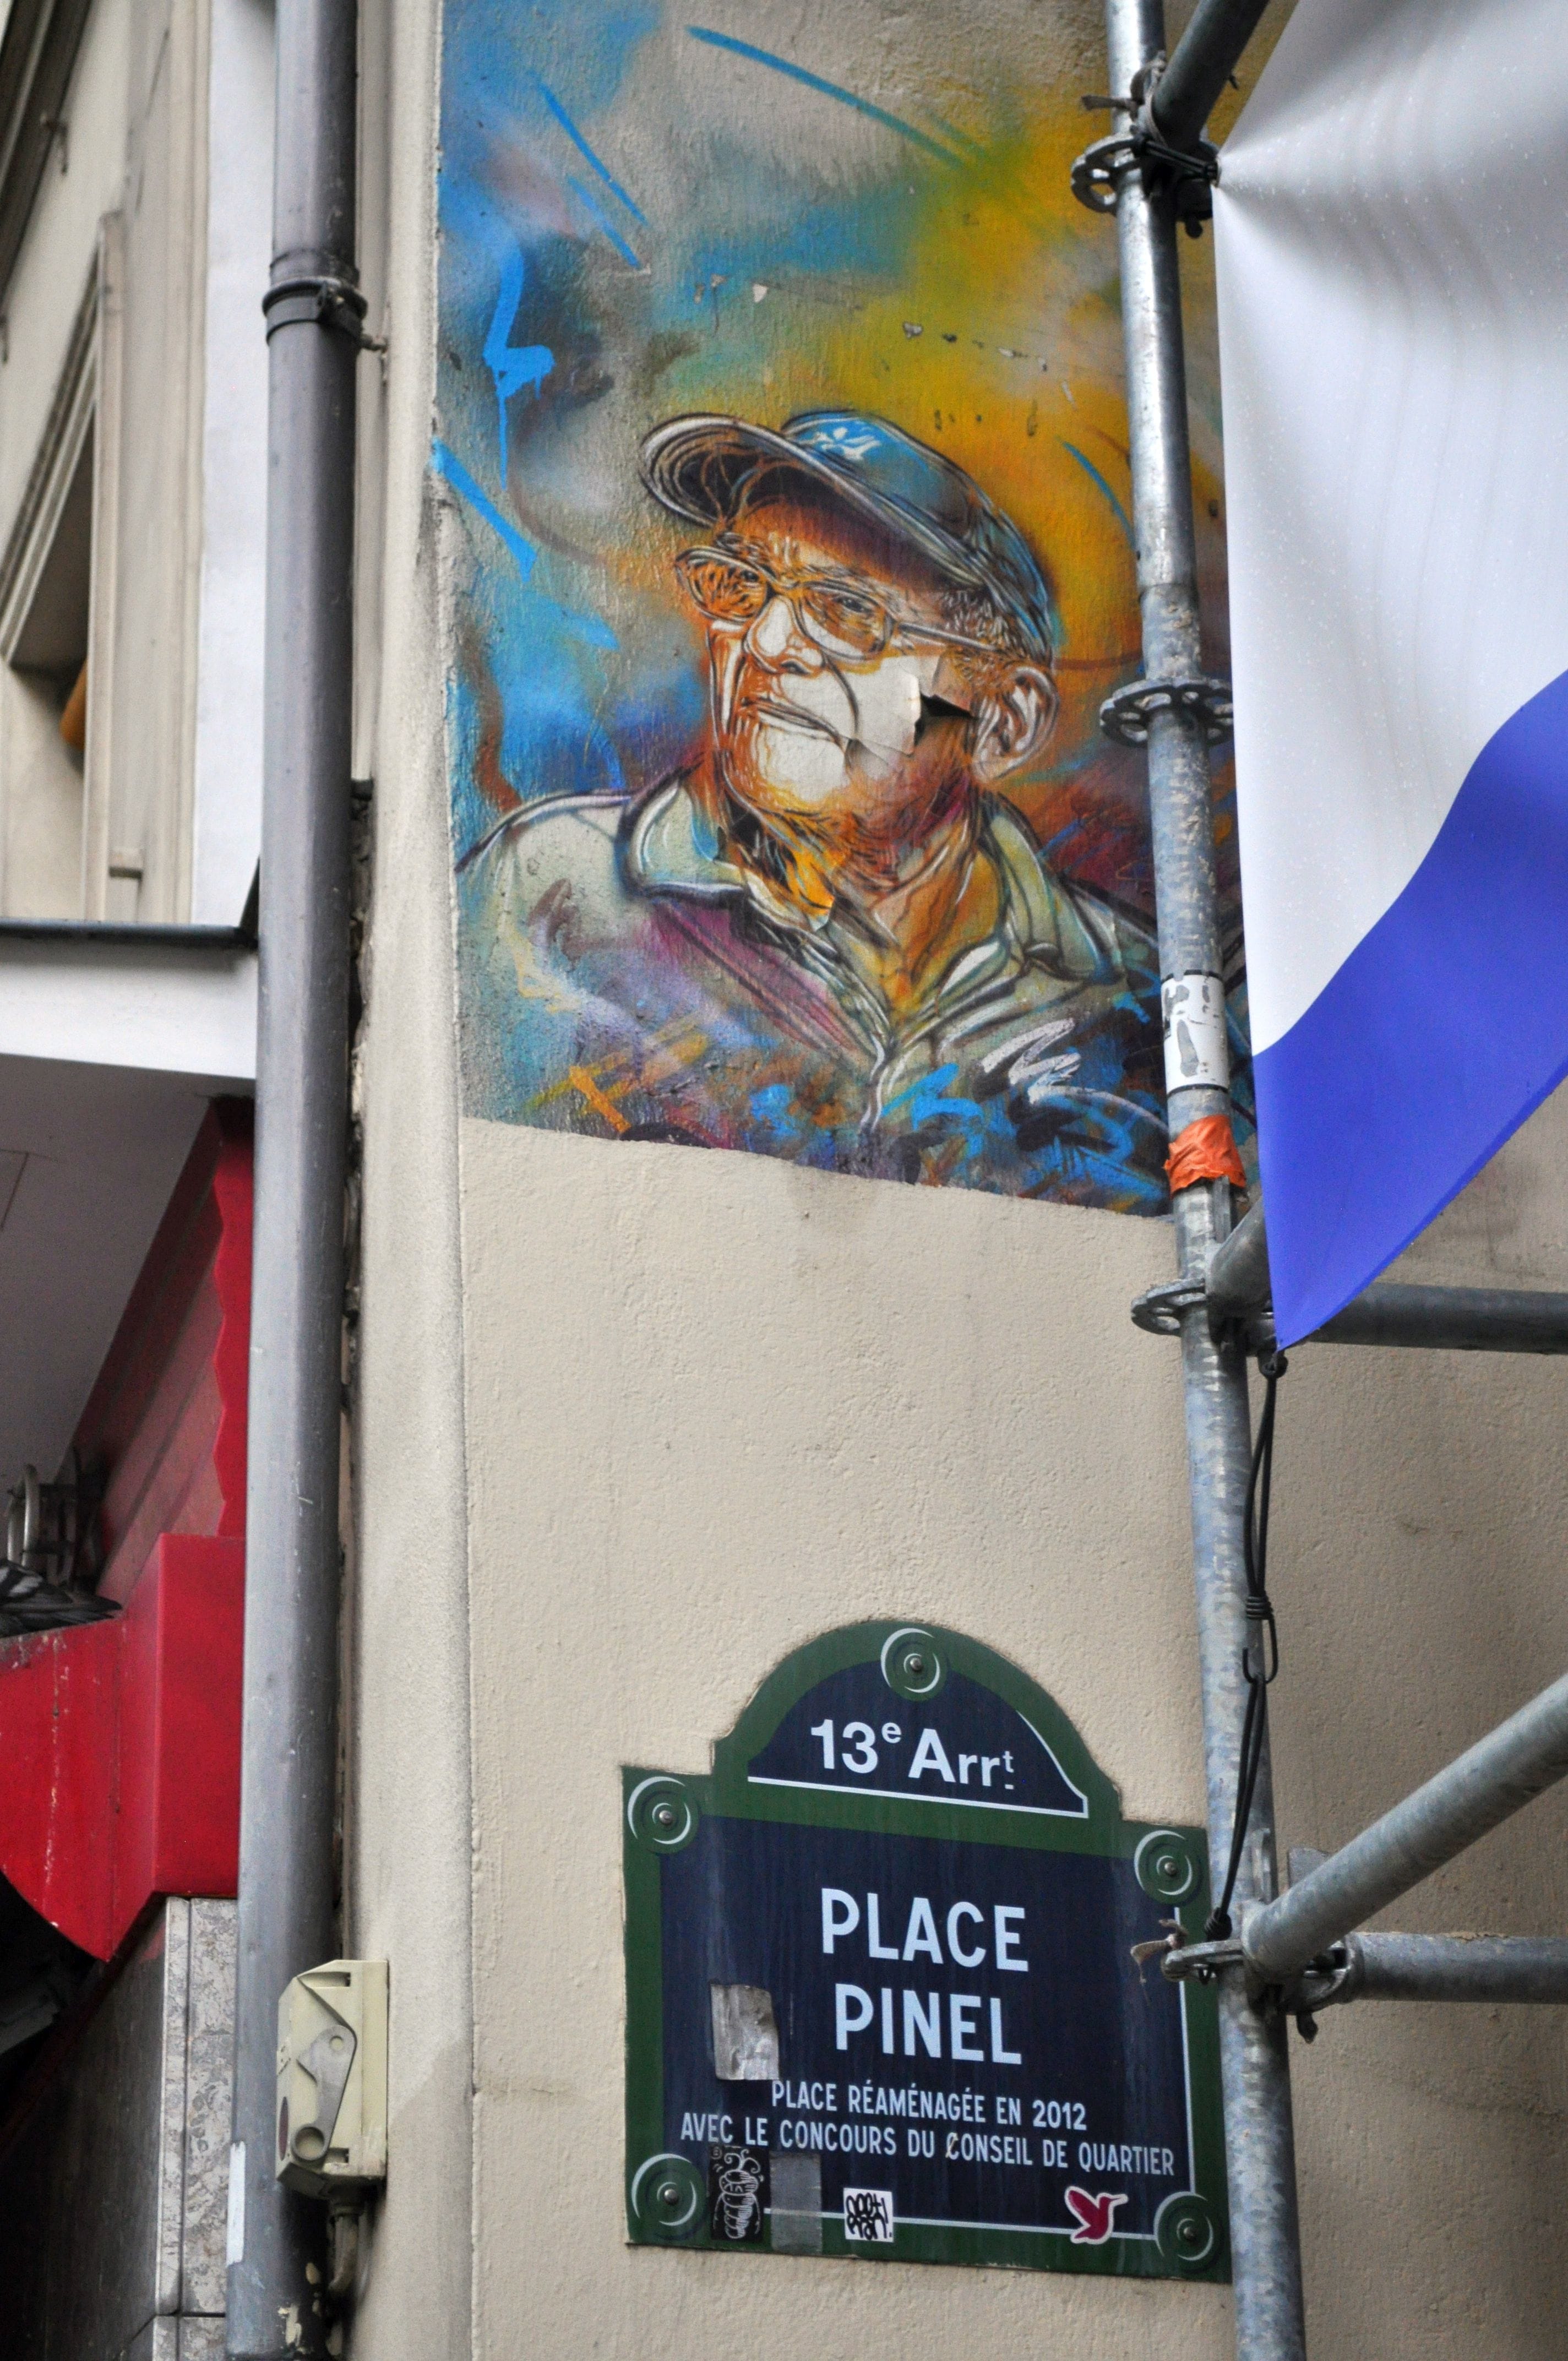 Graffiti 4545  by the artist C215 captured by elettrotajik in Paris France